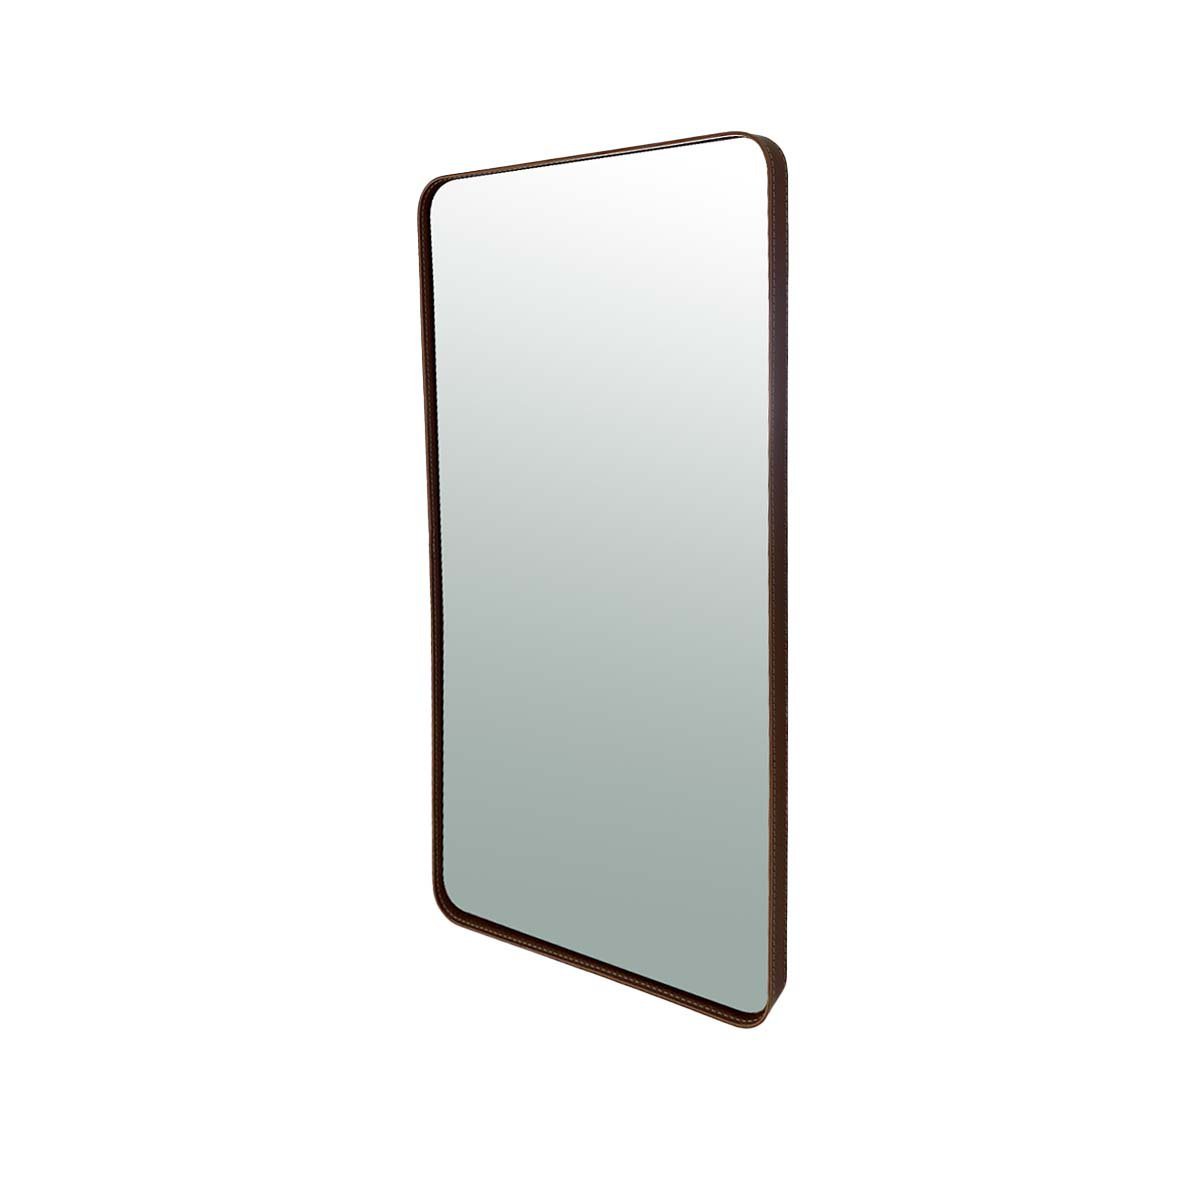 Espelho Retangular Decorativo Moldura Corino 60x35 - Marrom - 1